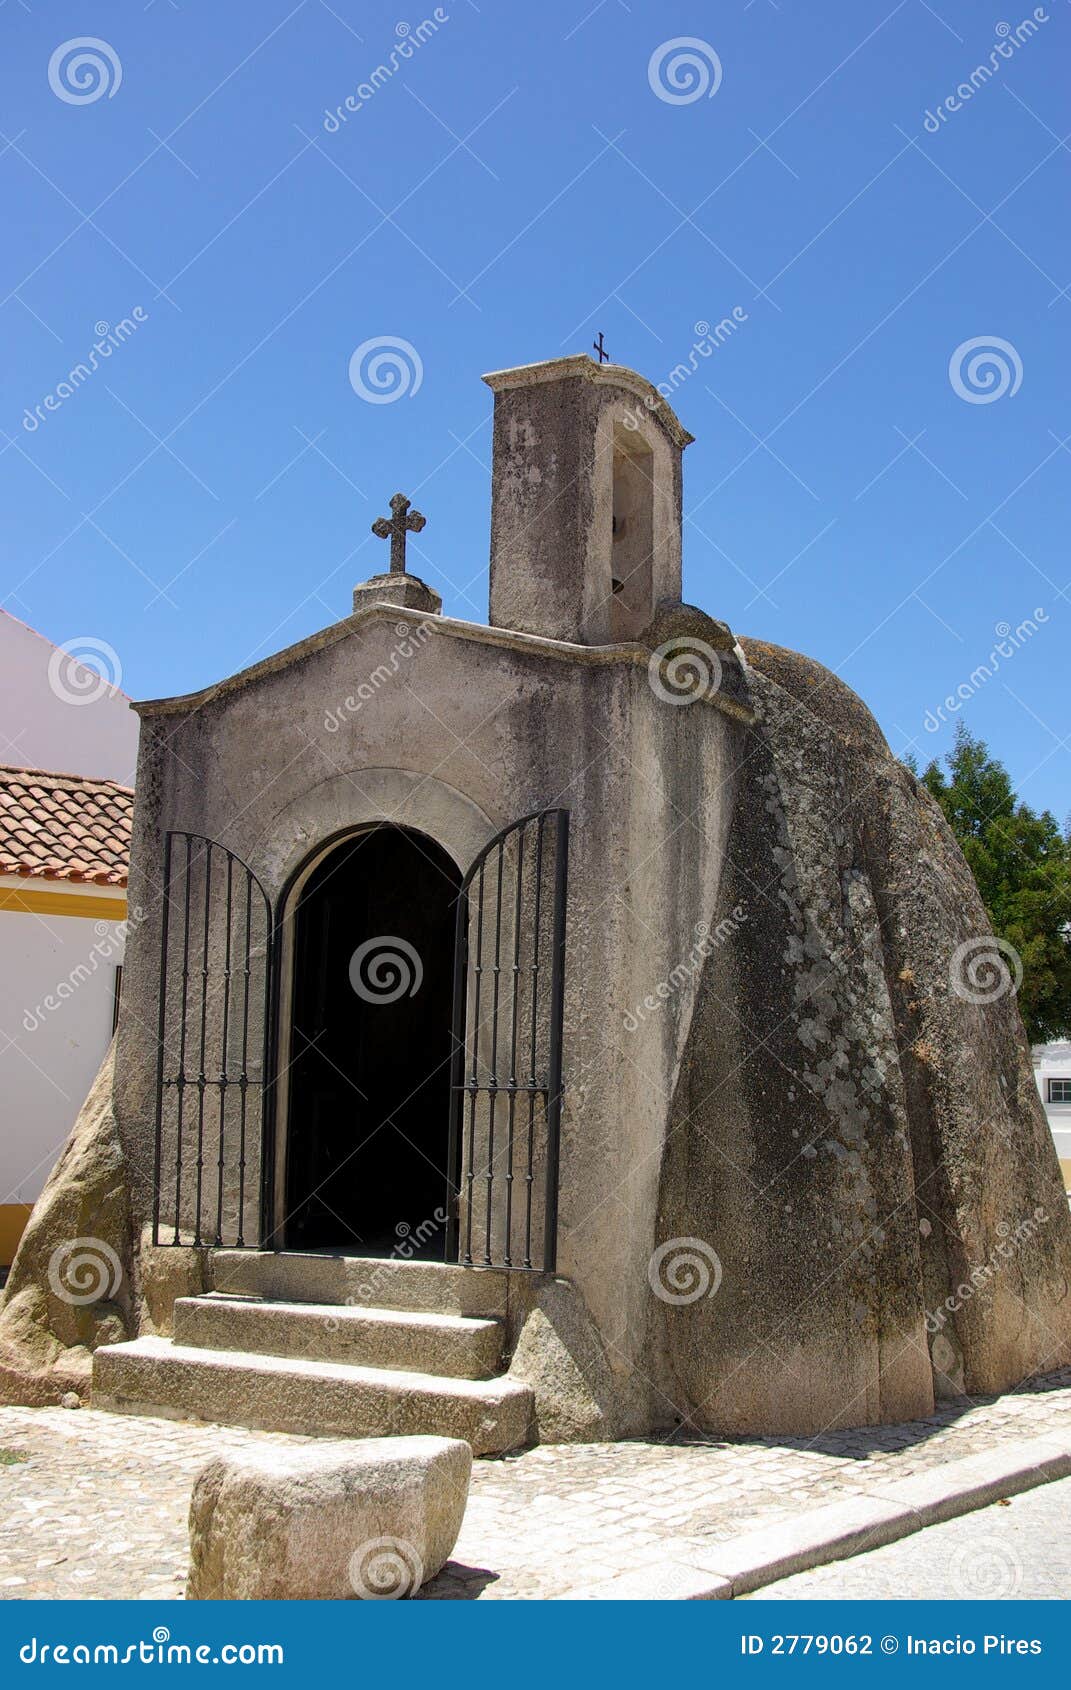 church from megalÃÂ­tic